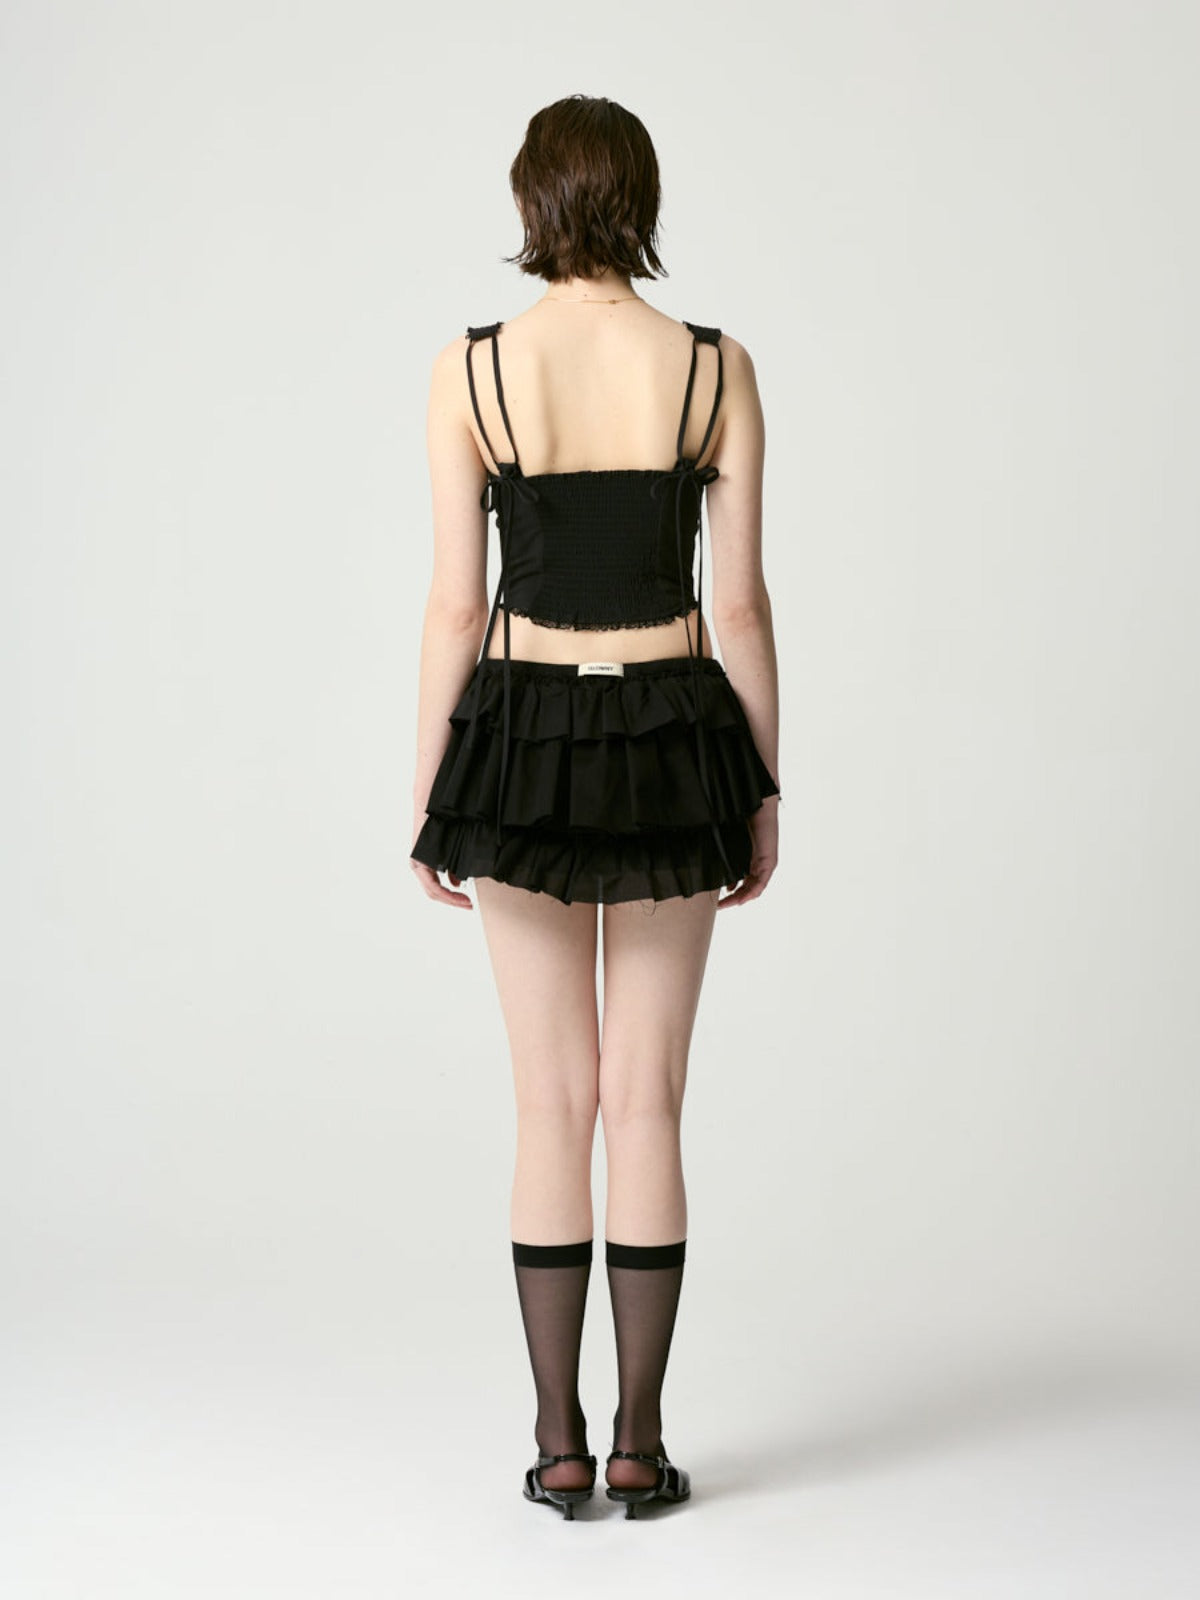 Shop Skirts | STORiES Official Site - STORiES Hong Kong